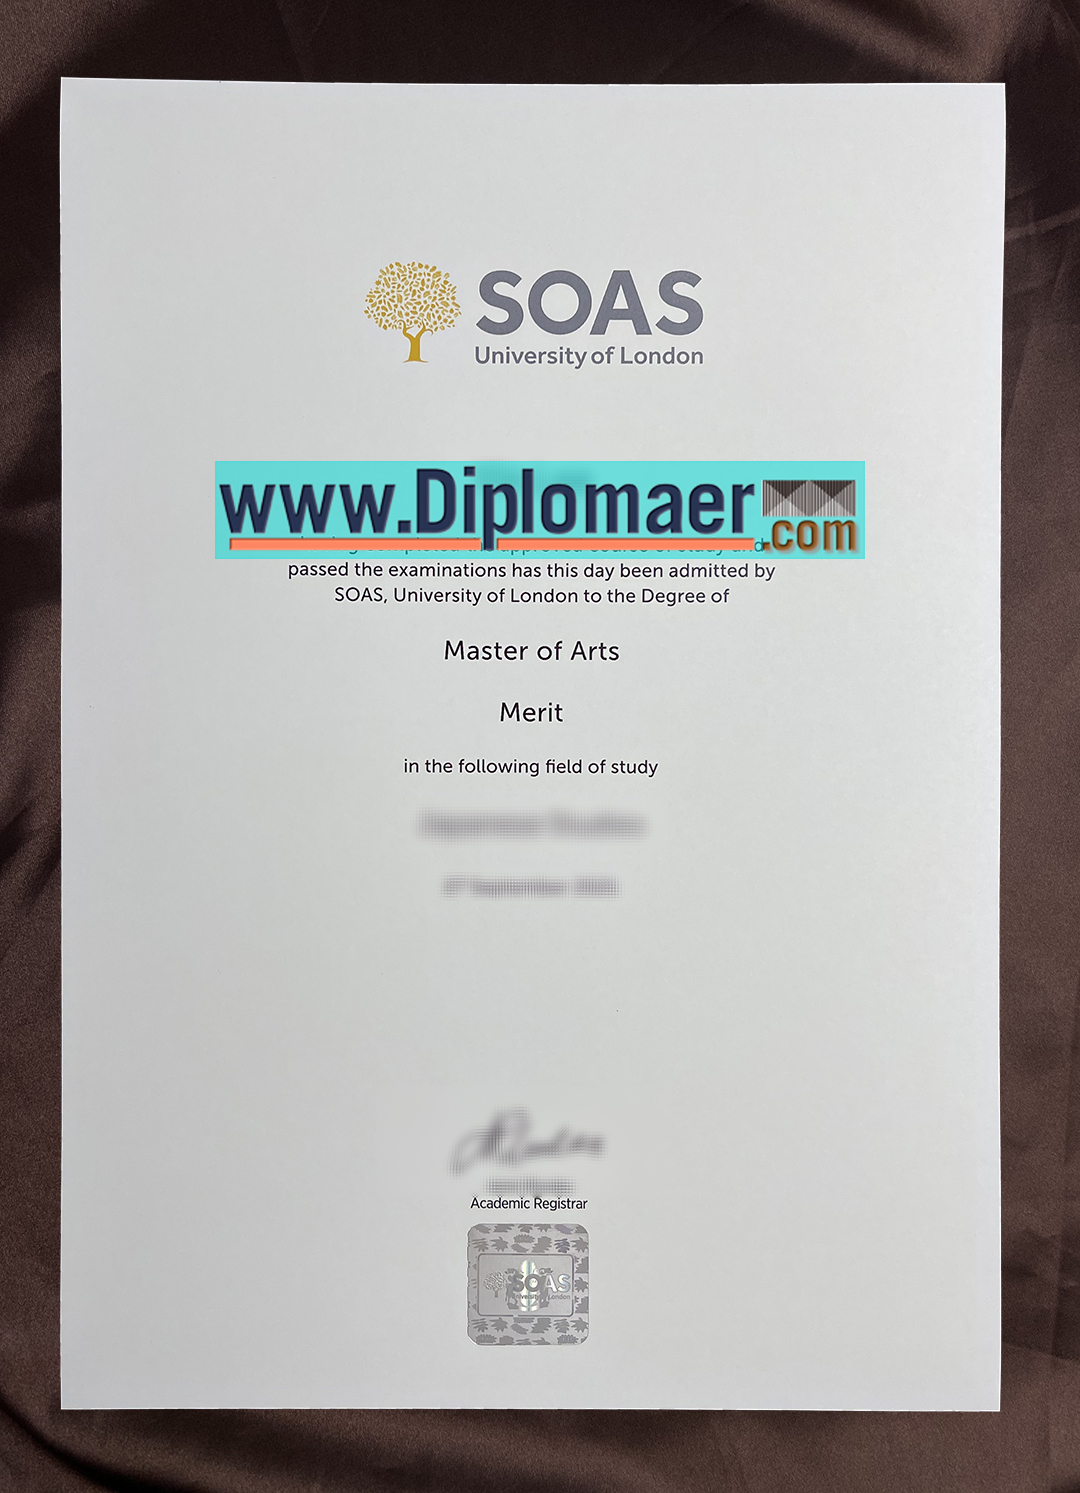 SOAS Fake Diploma - Where to buy the SOAS University of London Fake diploma in the UK?